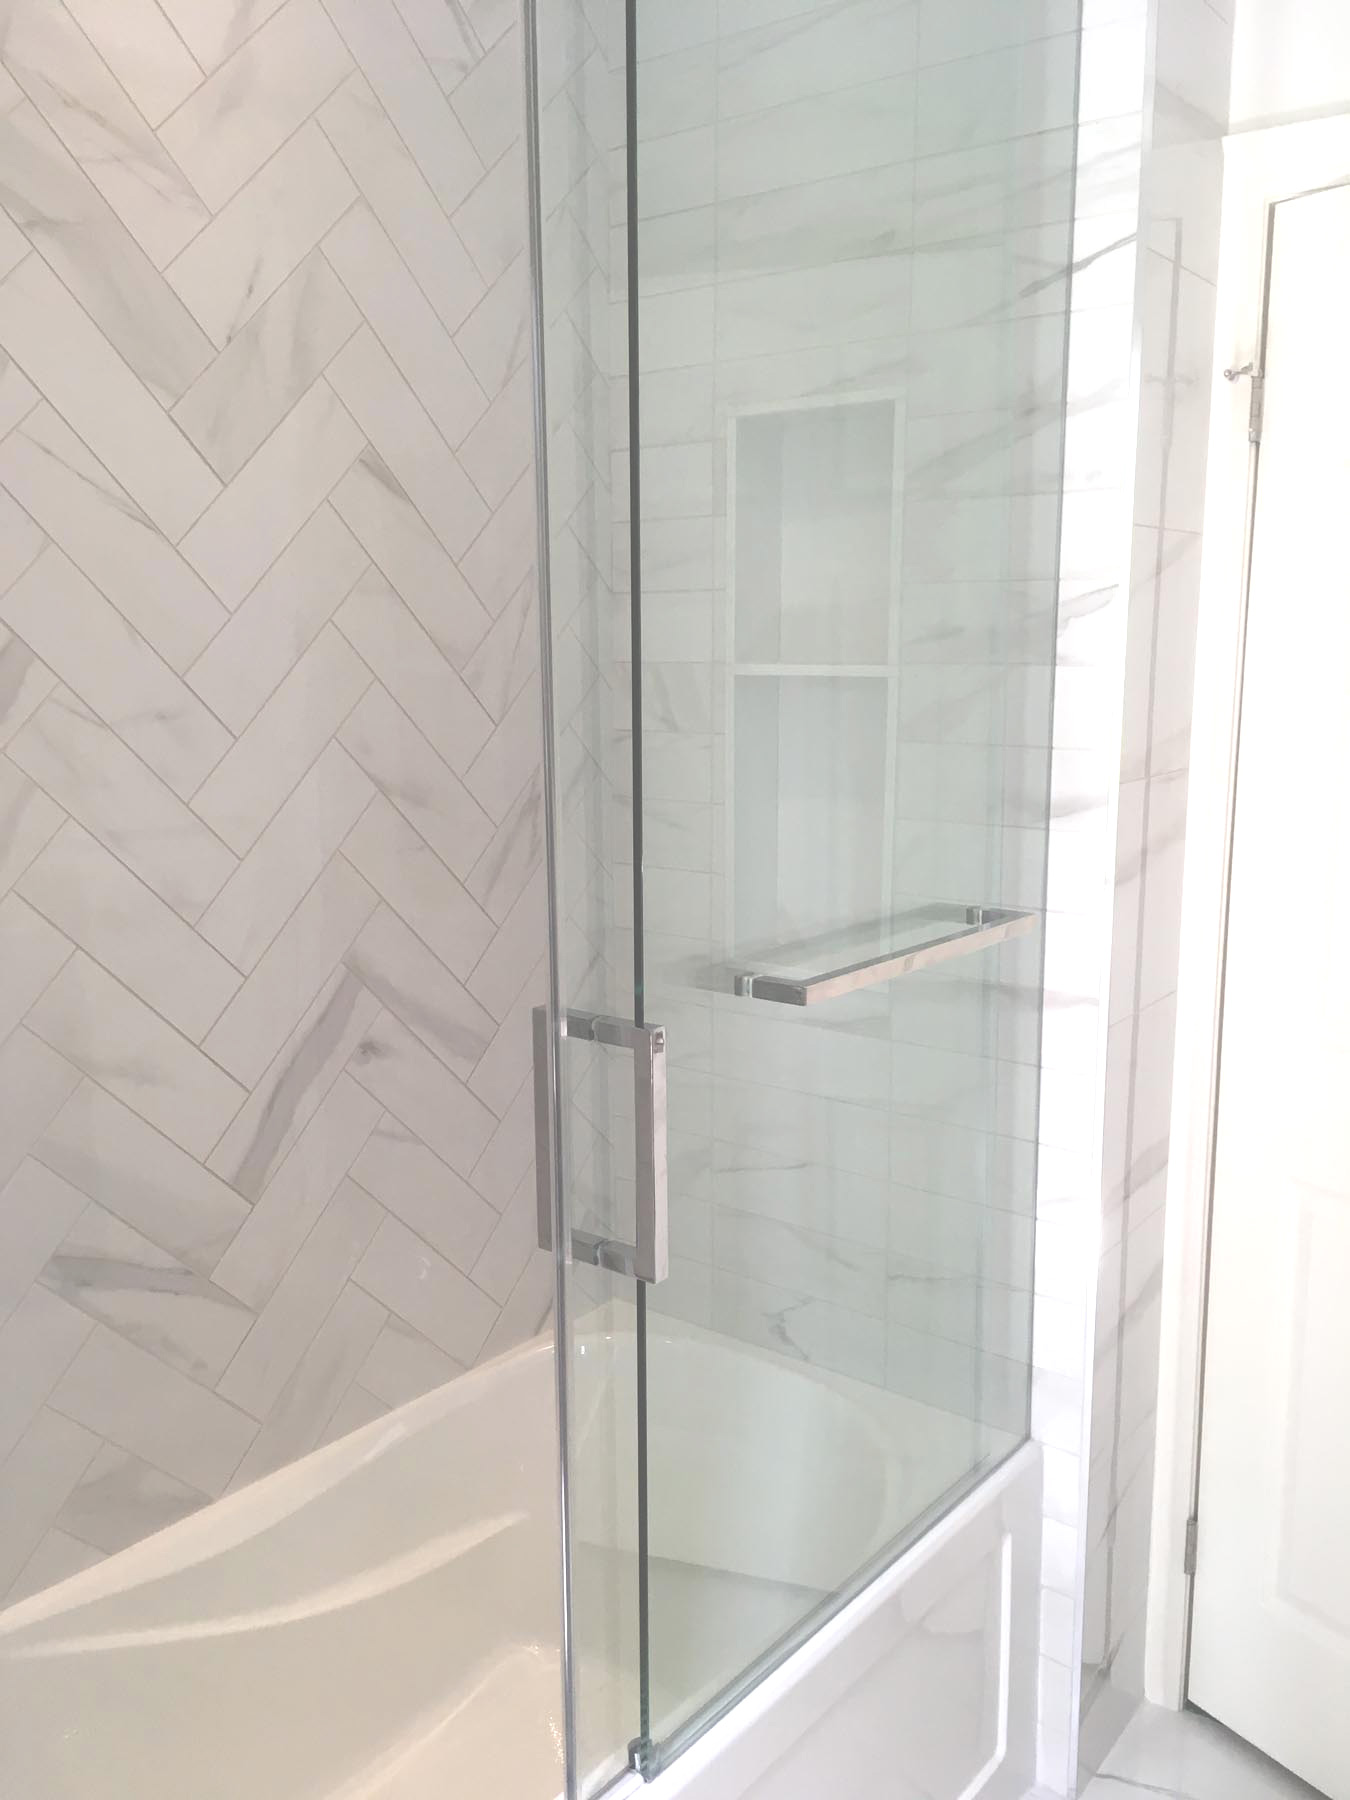 herringbone tile pattern in tub/shower